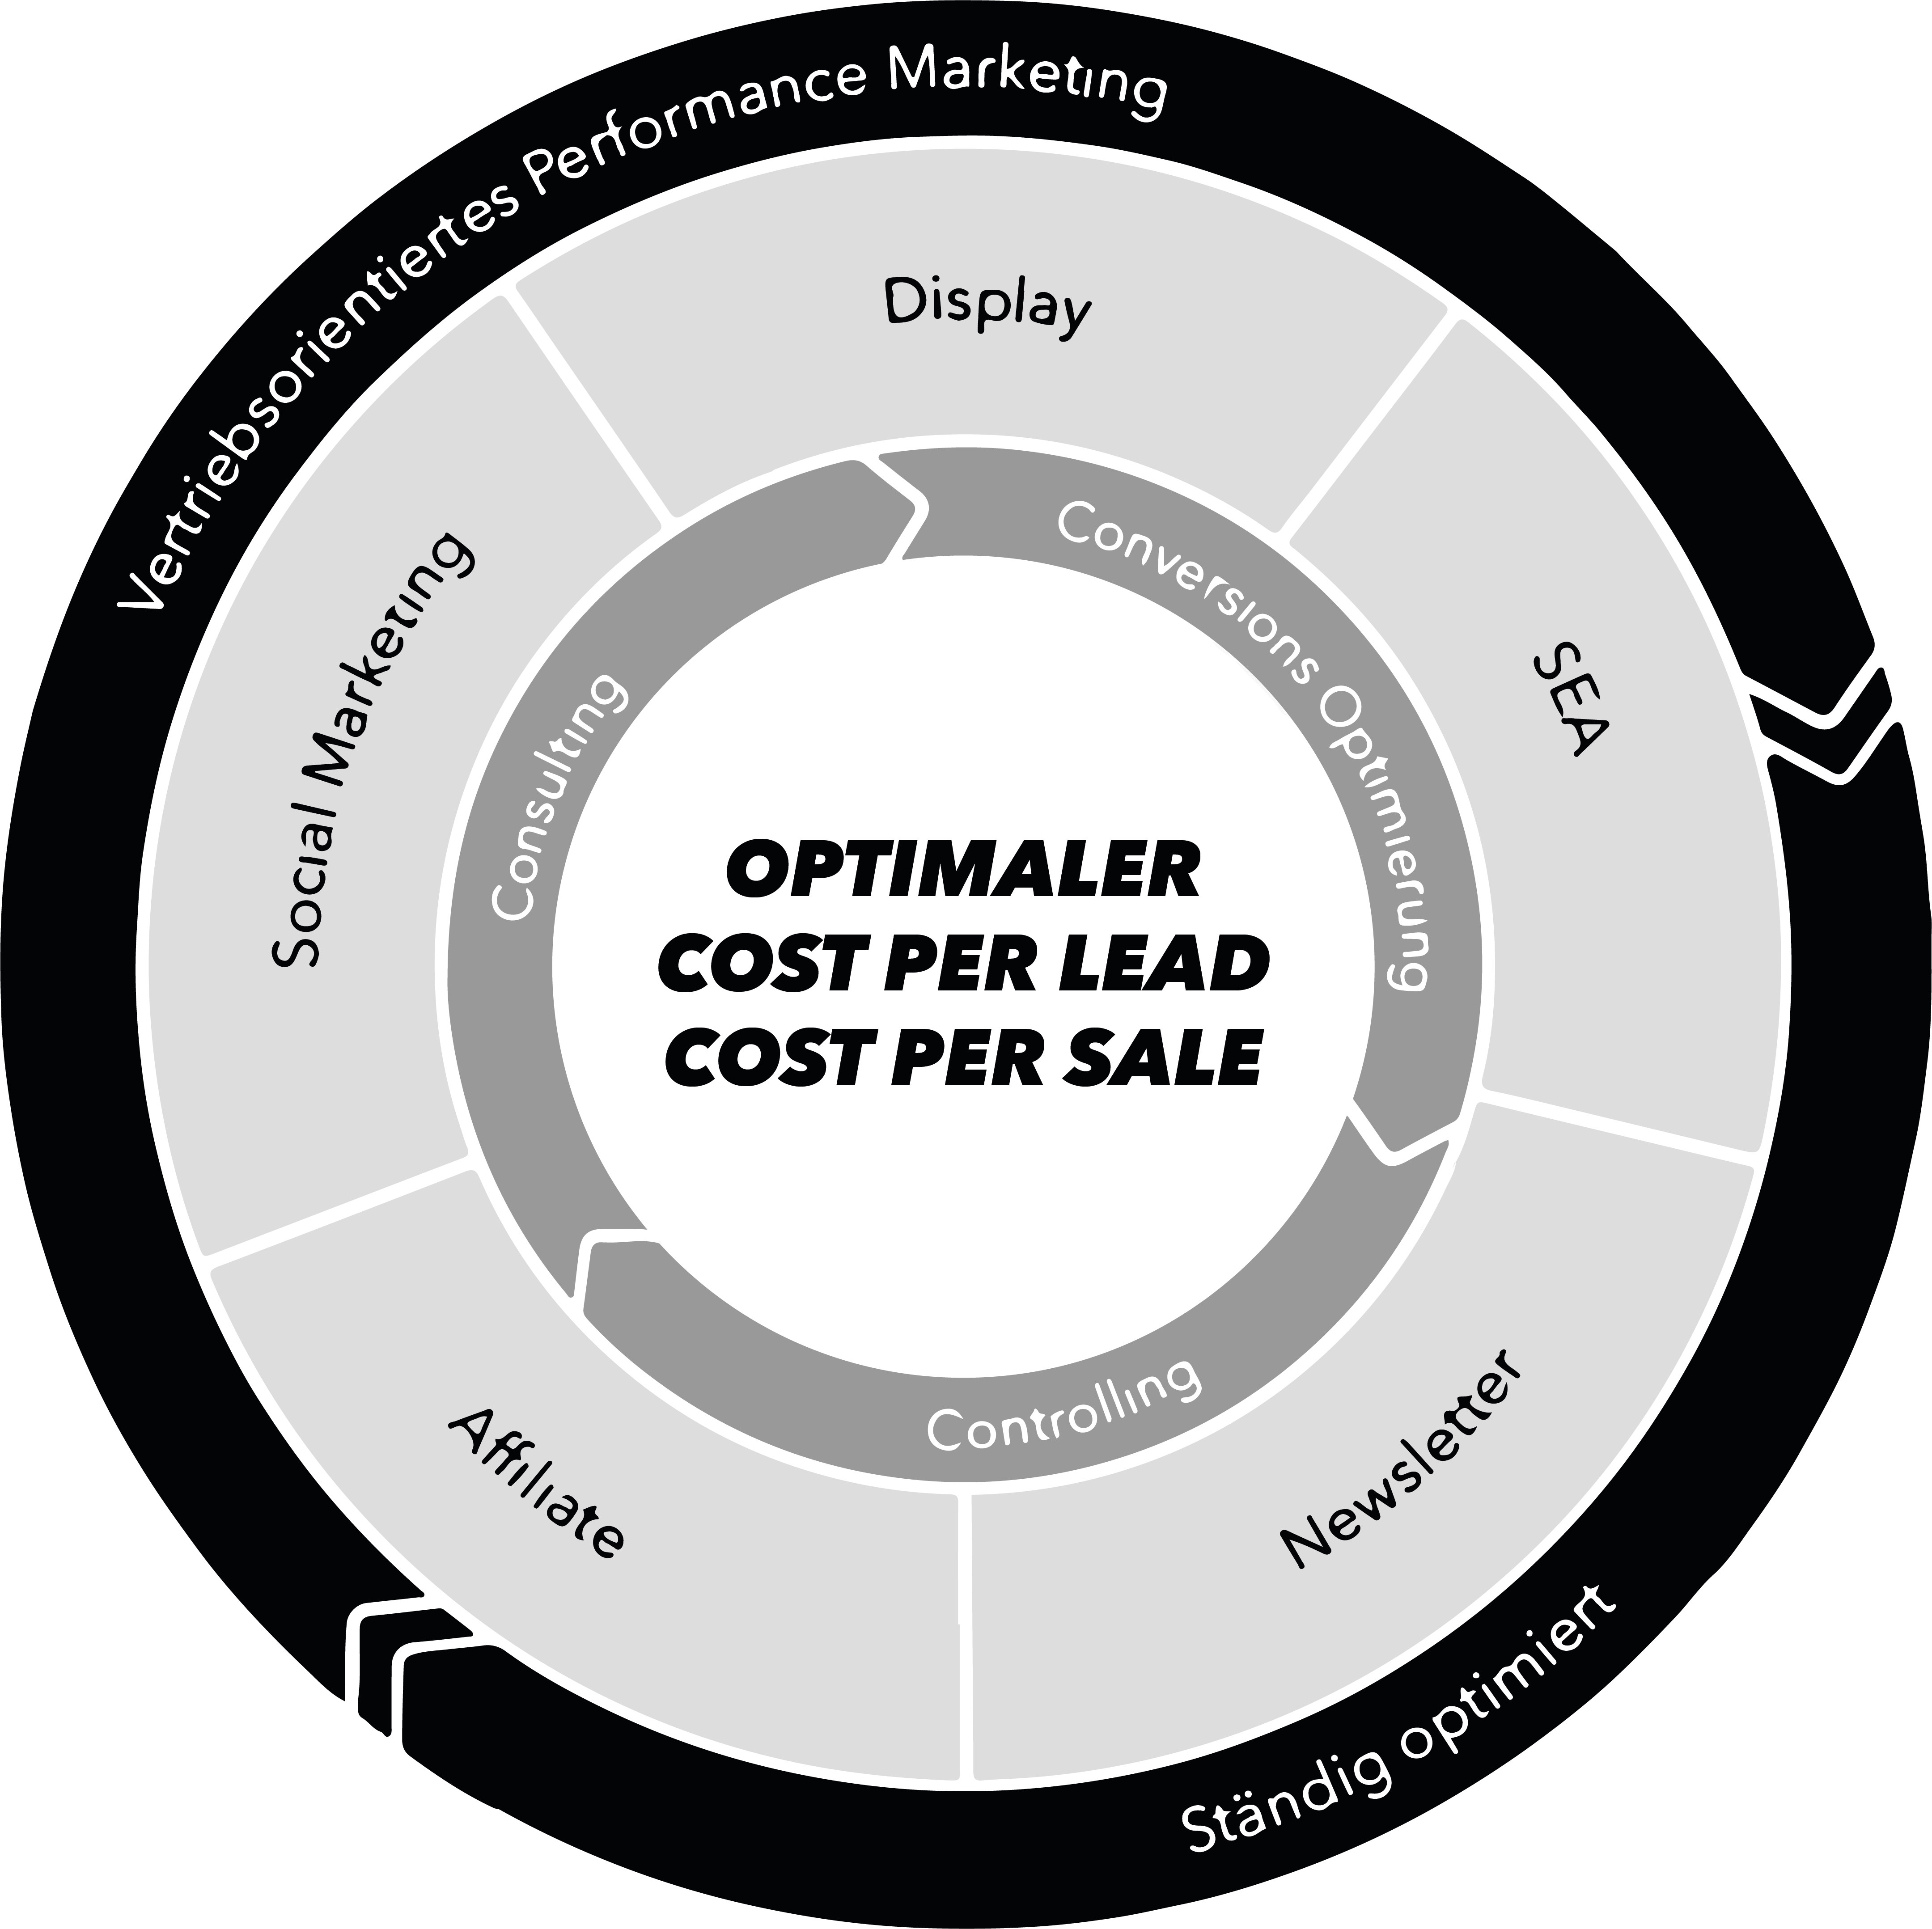 Optimaler Cost per Lead Performance Marketing